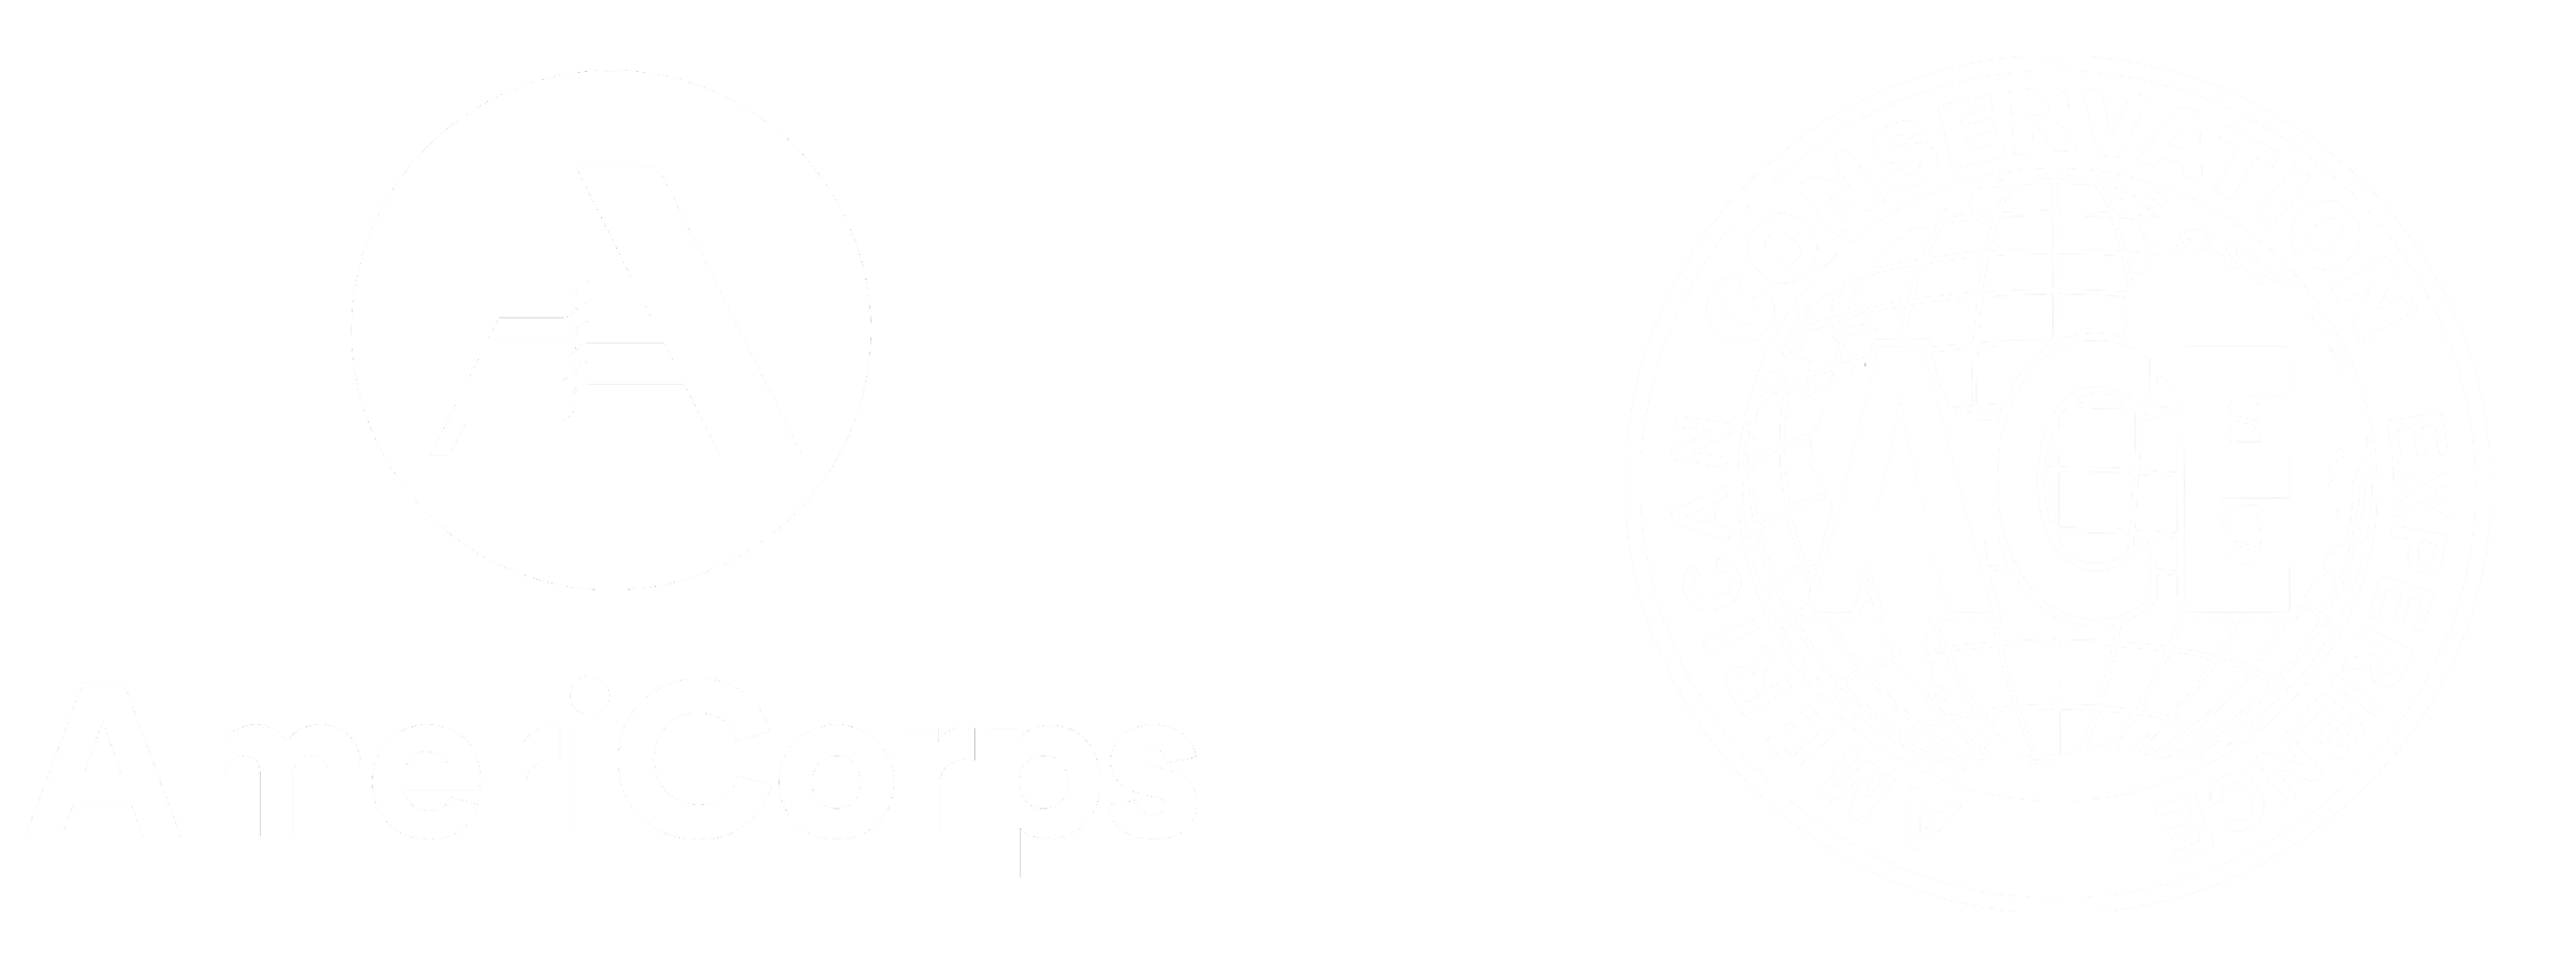 AmeriCorps Cobranding Logos